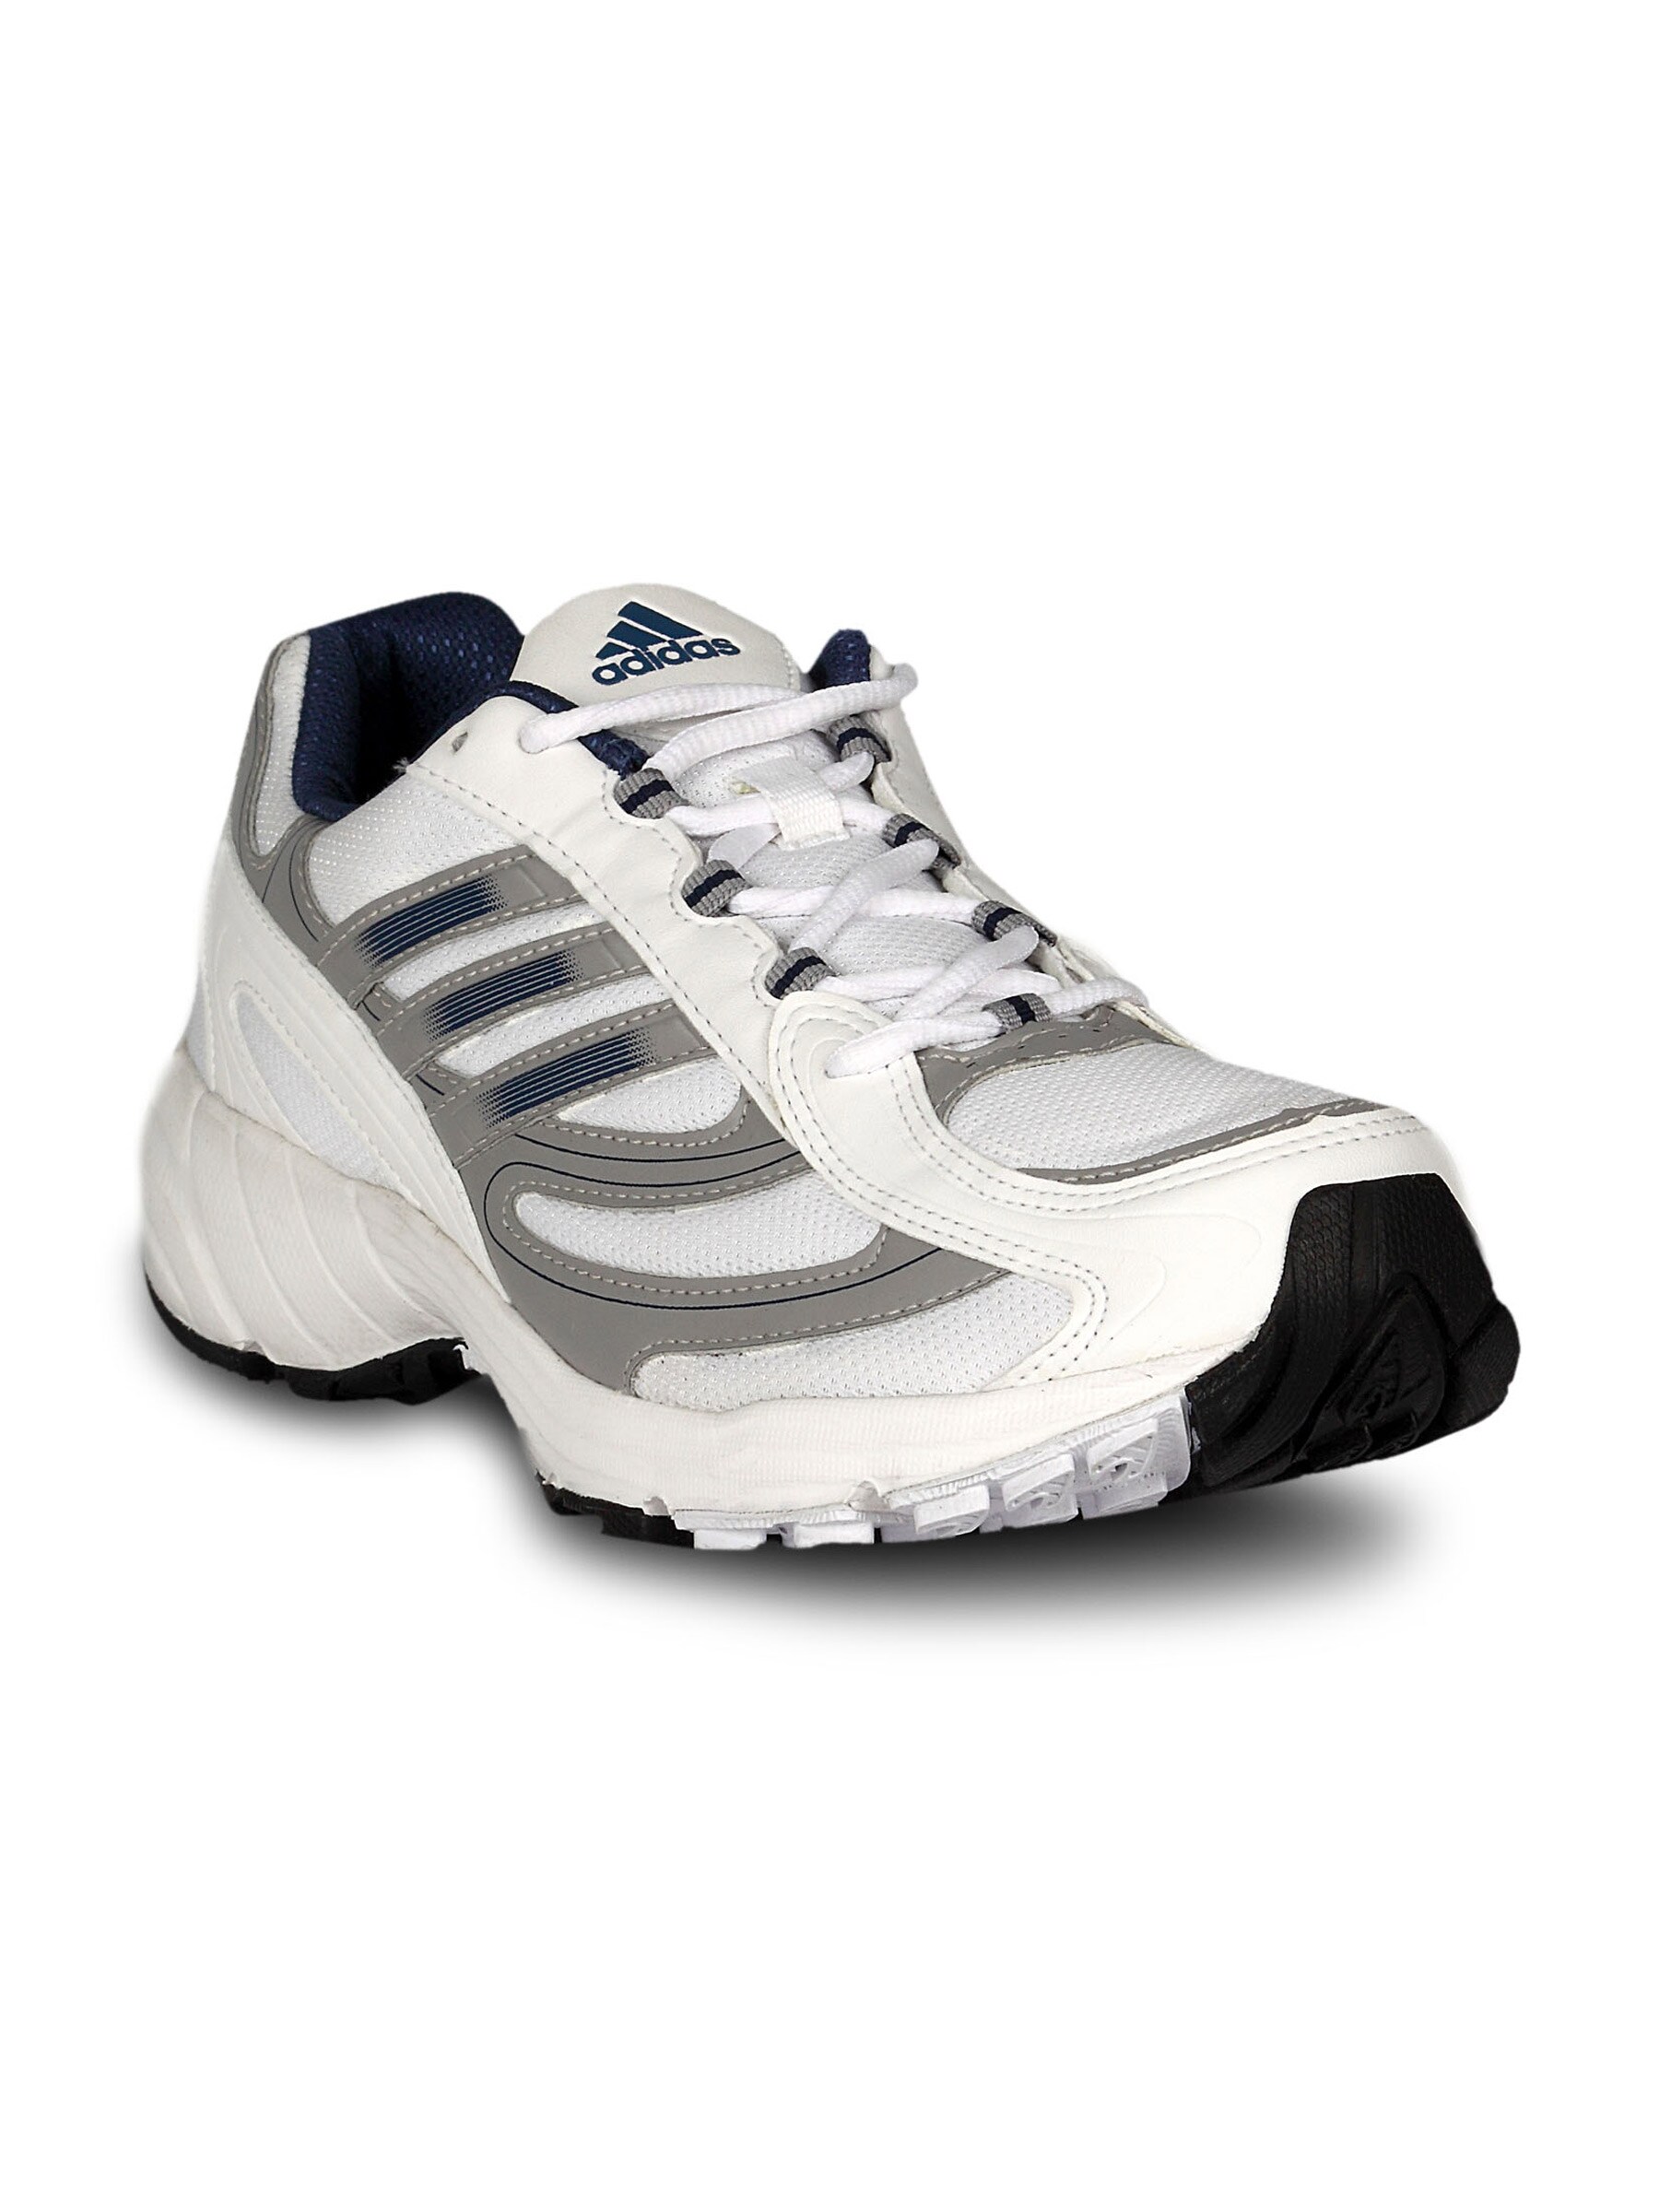 ADIDAS Men's Vanquish White Uni Blue Shoe